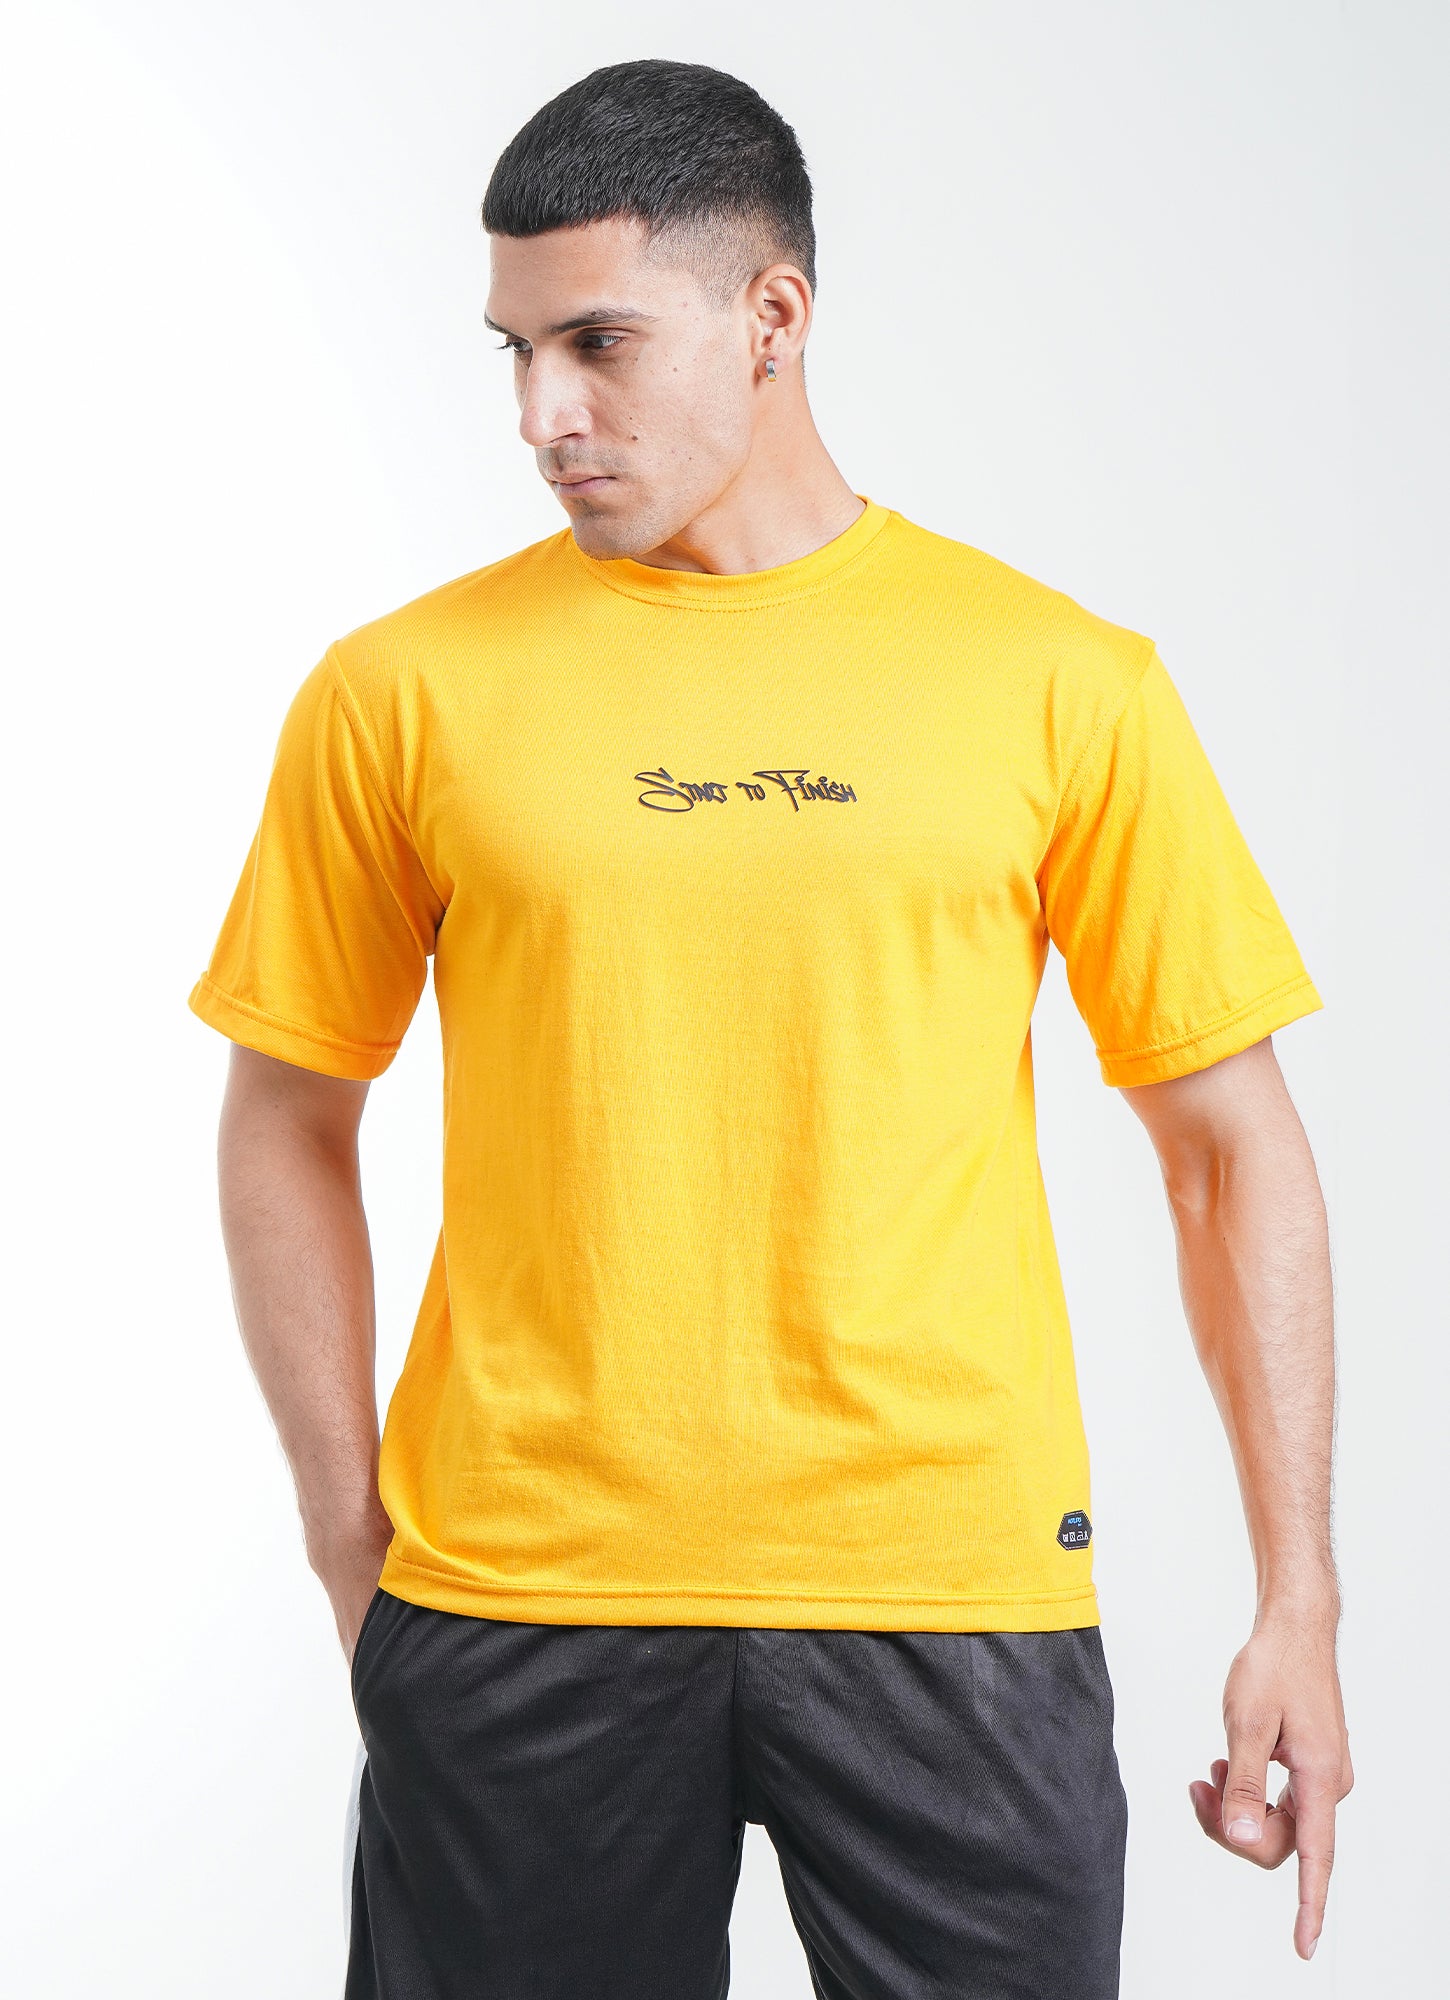 Popeye Loose Fit Yellow T-Shirt for Gym | HustlersOnlyPK